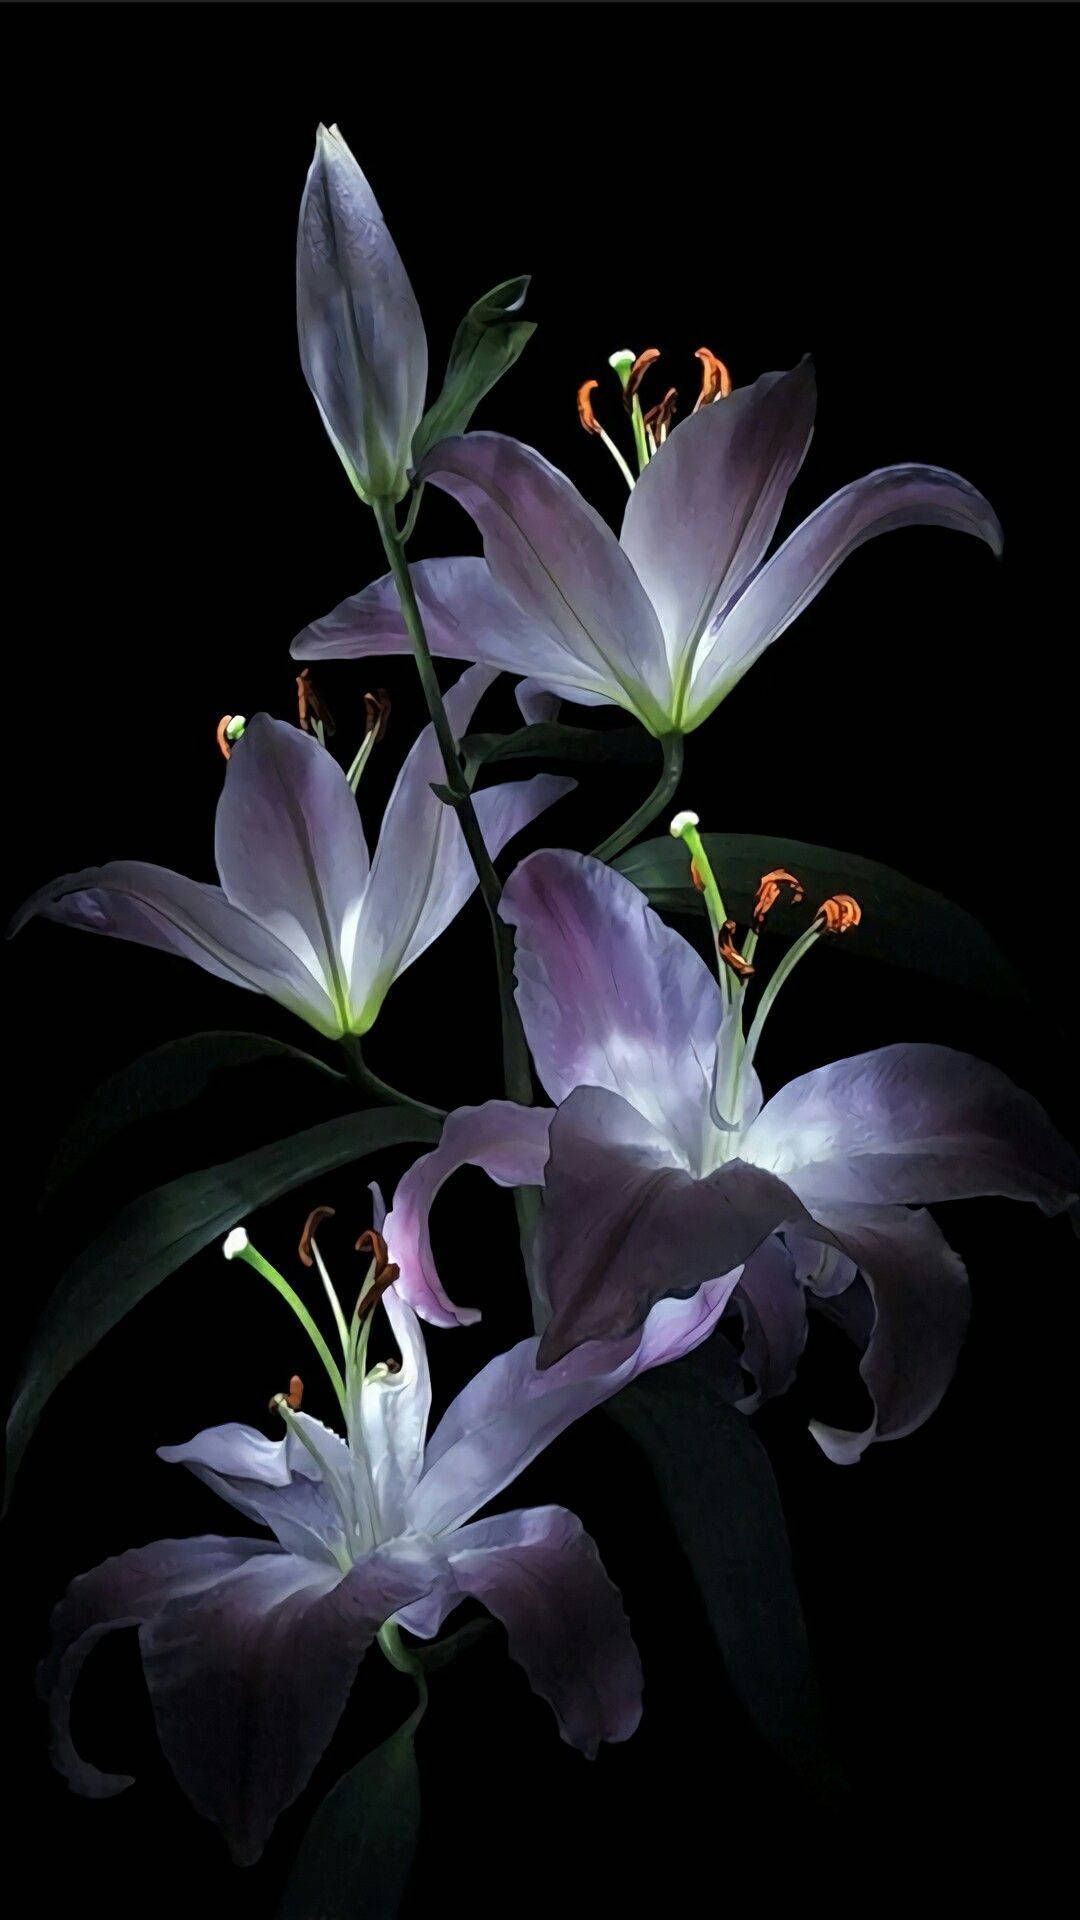 Gleaming White Lily In Dark Background